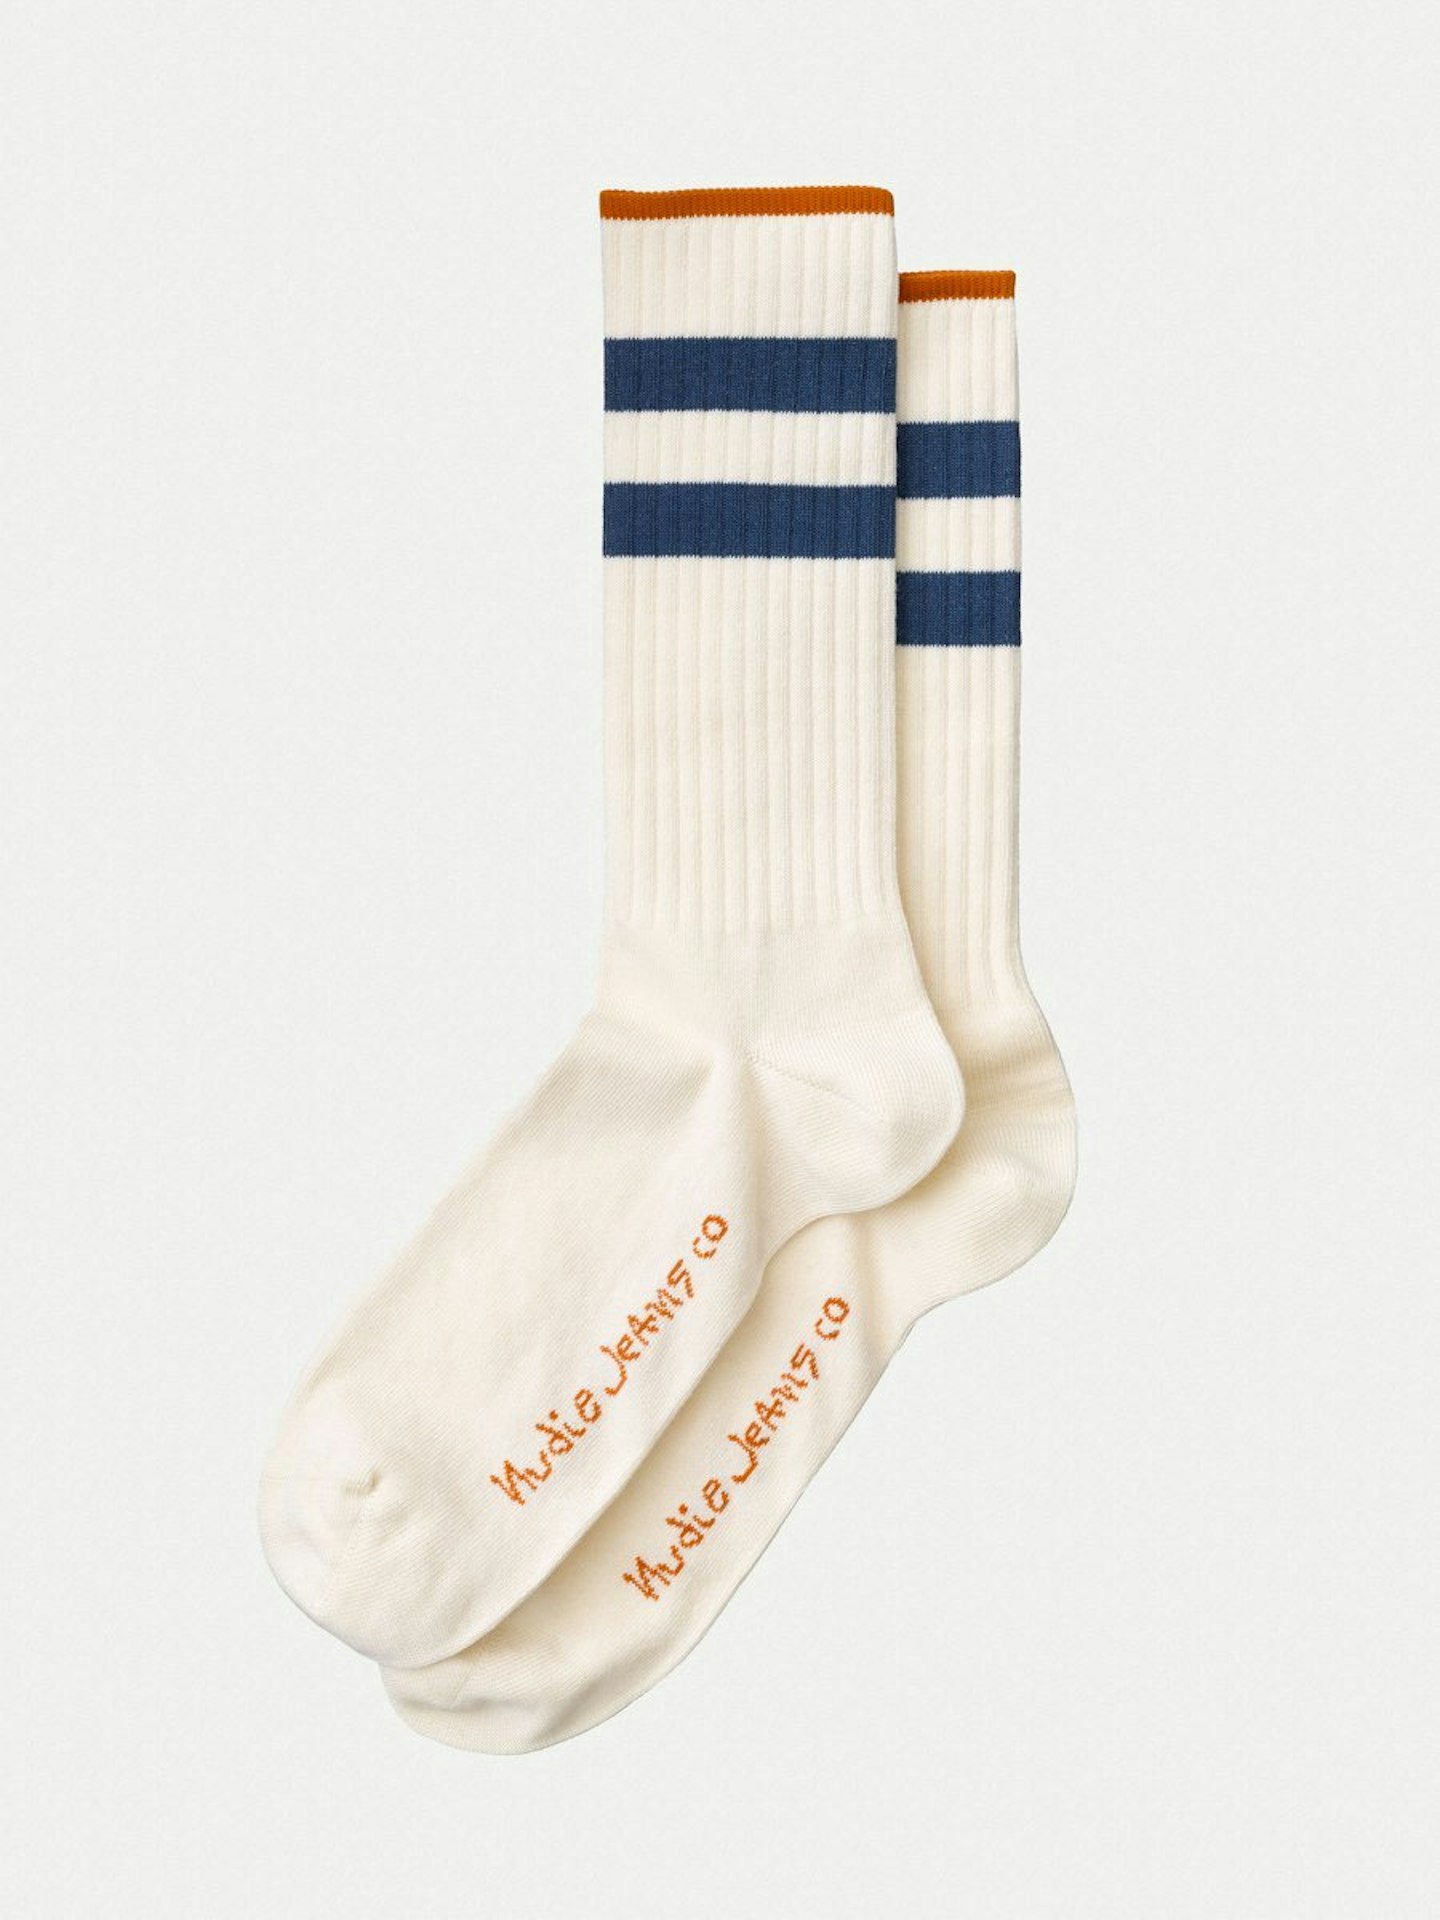 Nudie Jeans, Amundsson Sport Socks White/Navy, £9